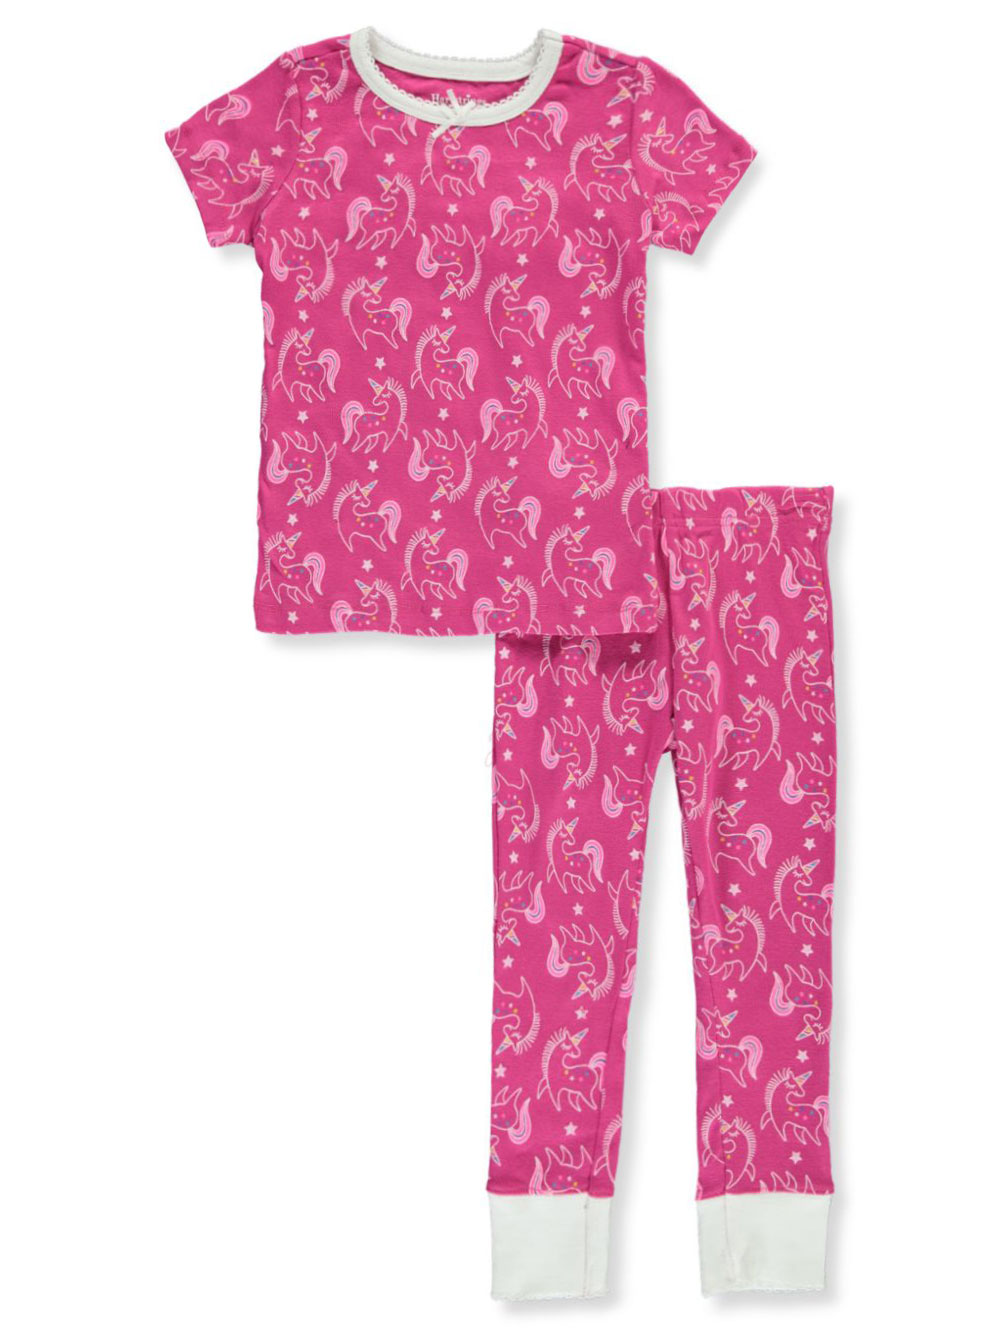 Size 5-6 Pajamas for Girls